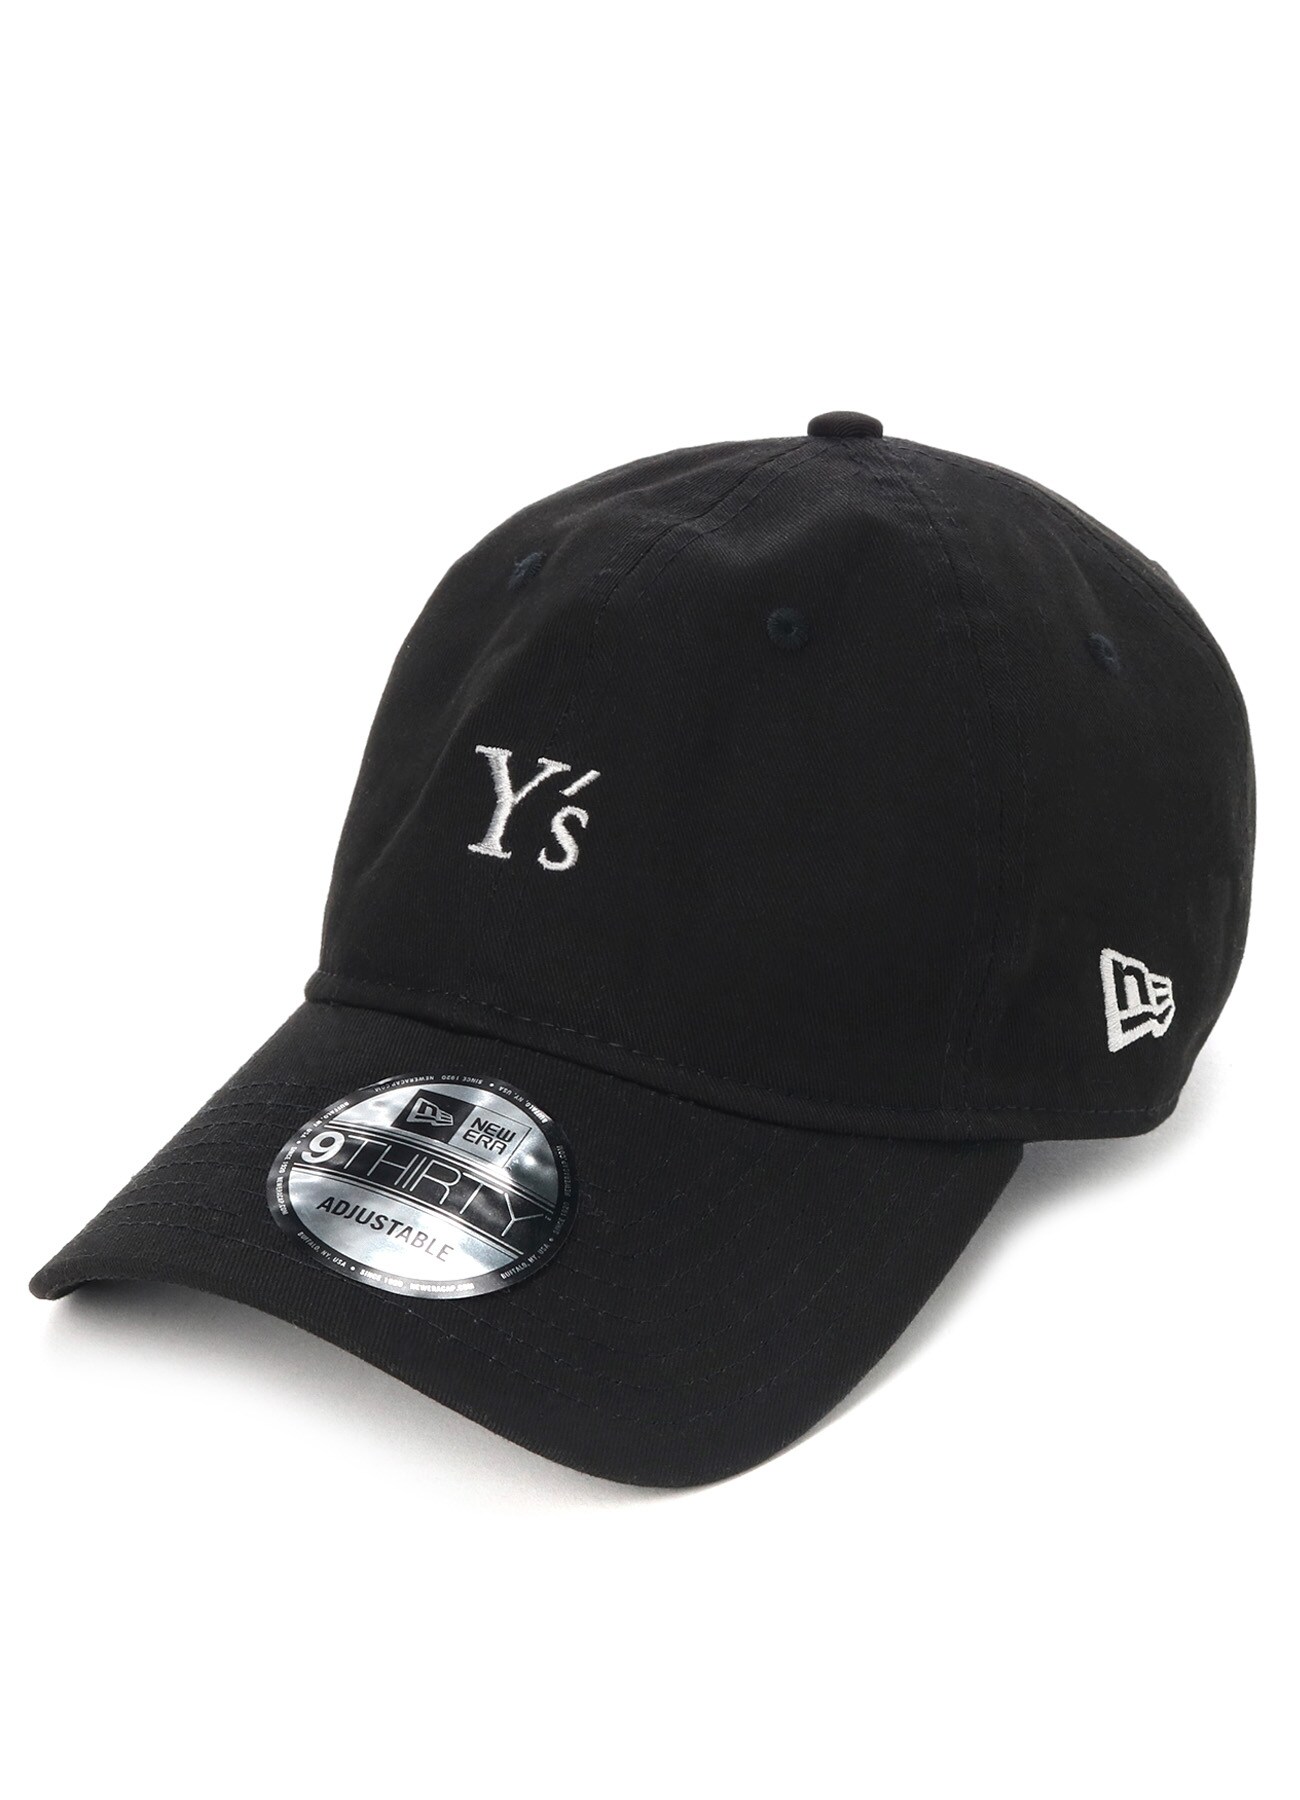 Y's × New Era 9THIRTY TM (S Black): Y's ｜ THE SHOP YOHJI YAMAMOTO